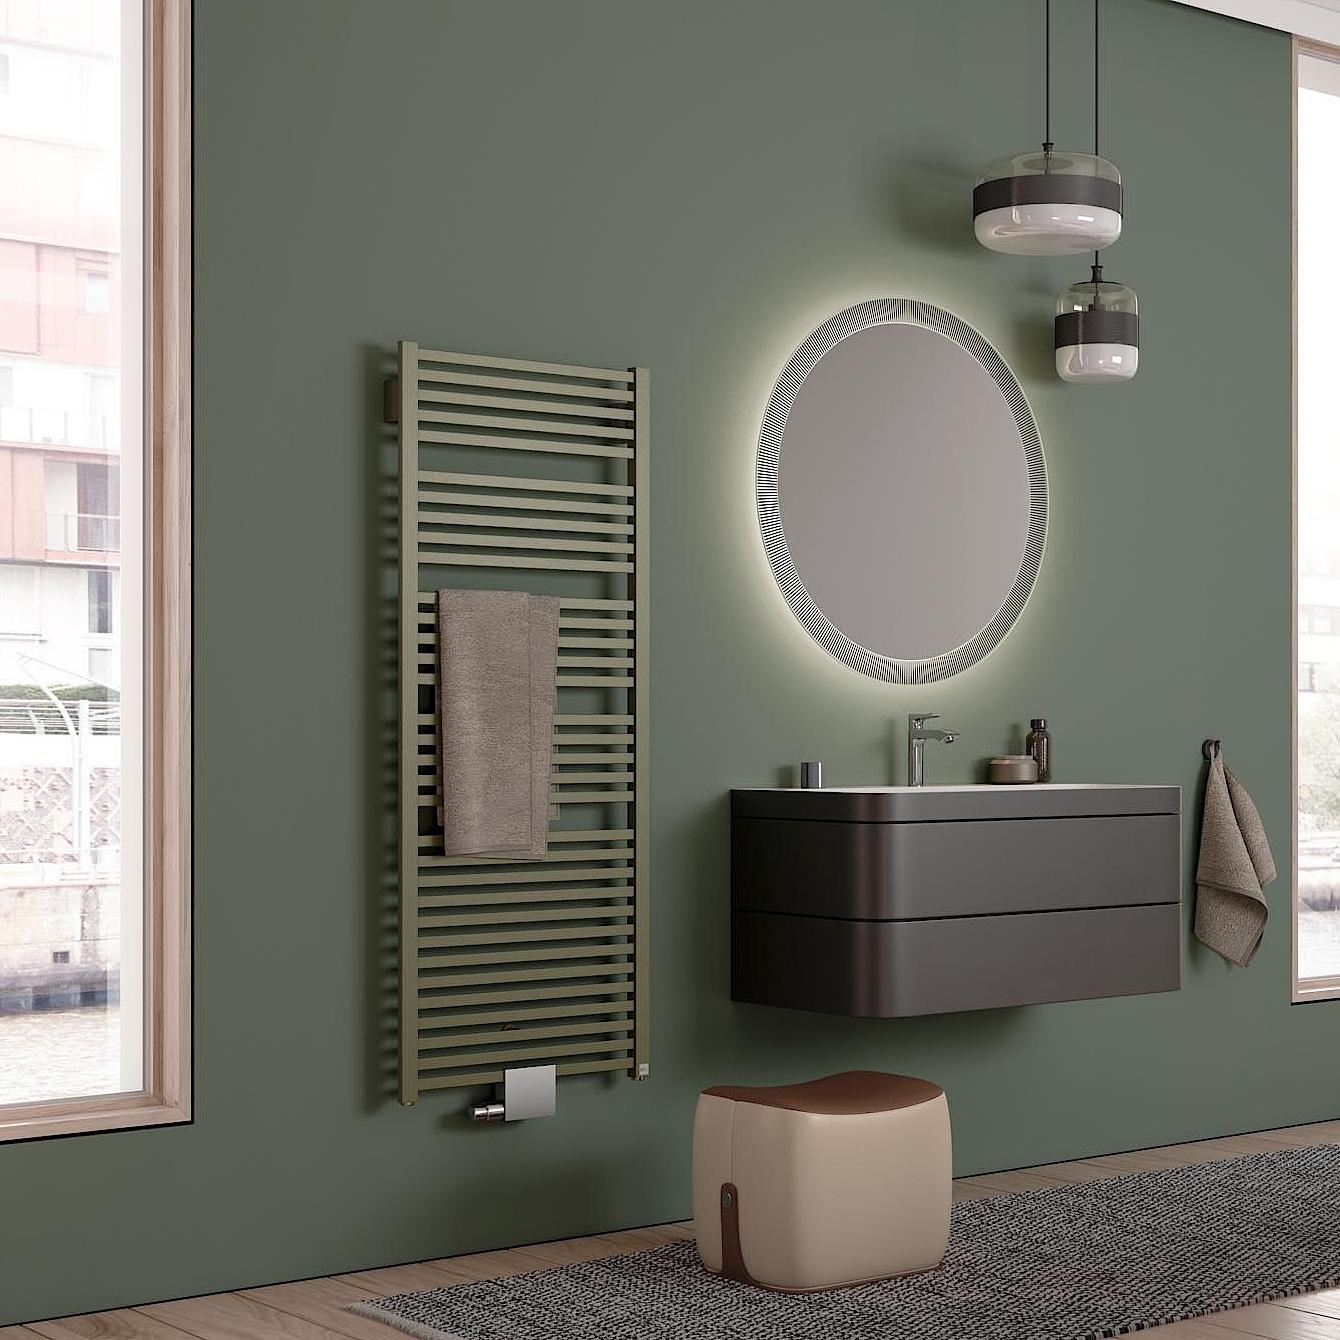 Kermi Geneo quadris designer and bathroom radiators – unusually shaped elements, attractive appearance.